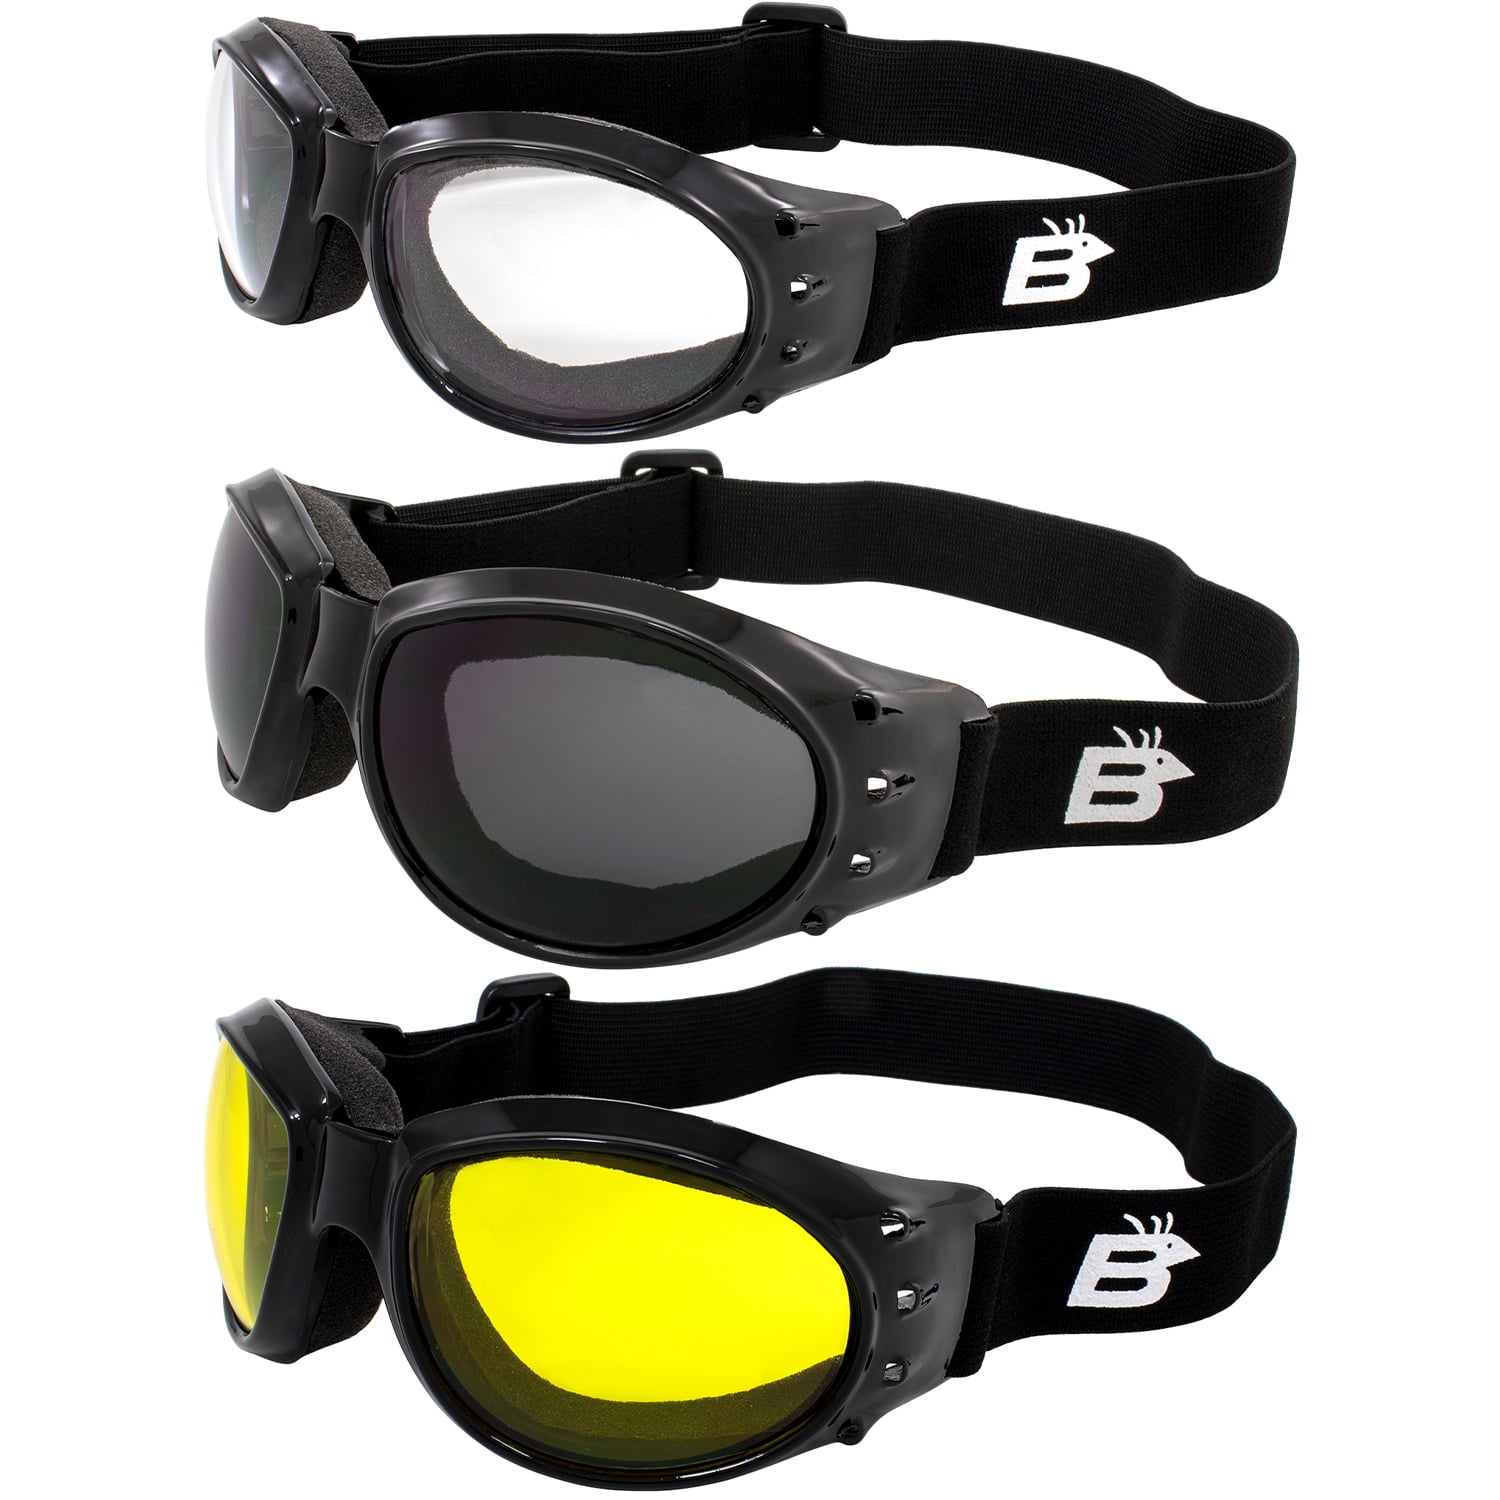 Motorcycle Goggles Glasses Sunglasses Padded Eva Foam Clear-Smoke-Yellow Lenses 